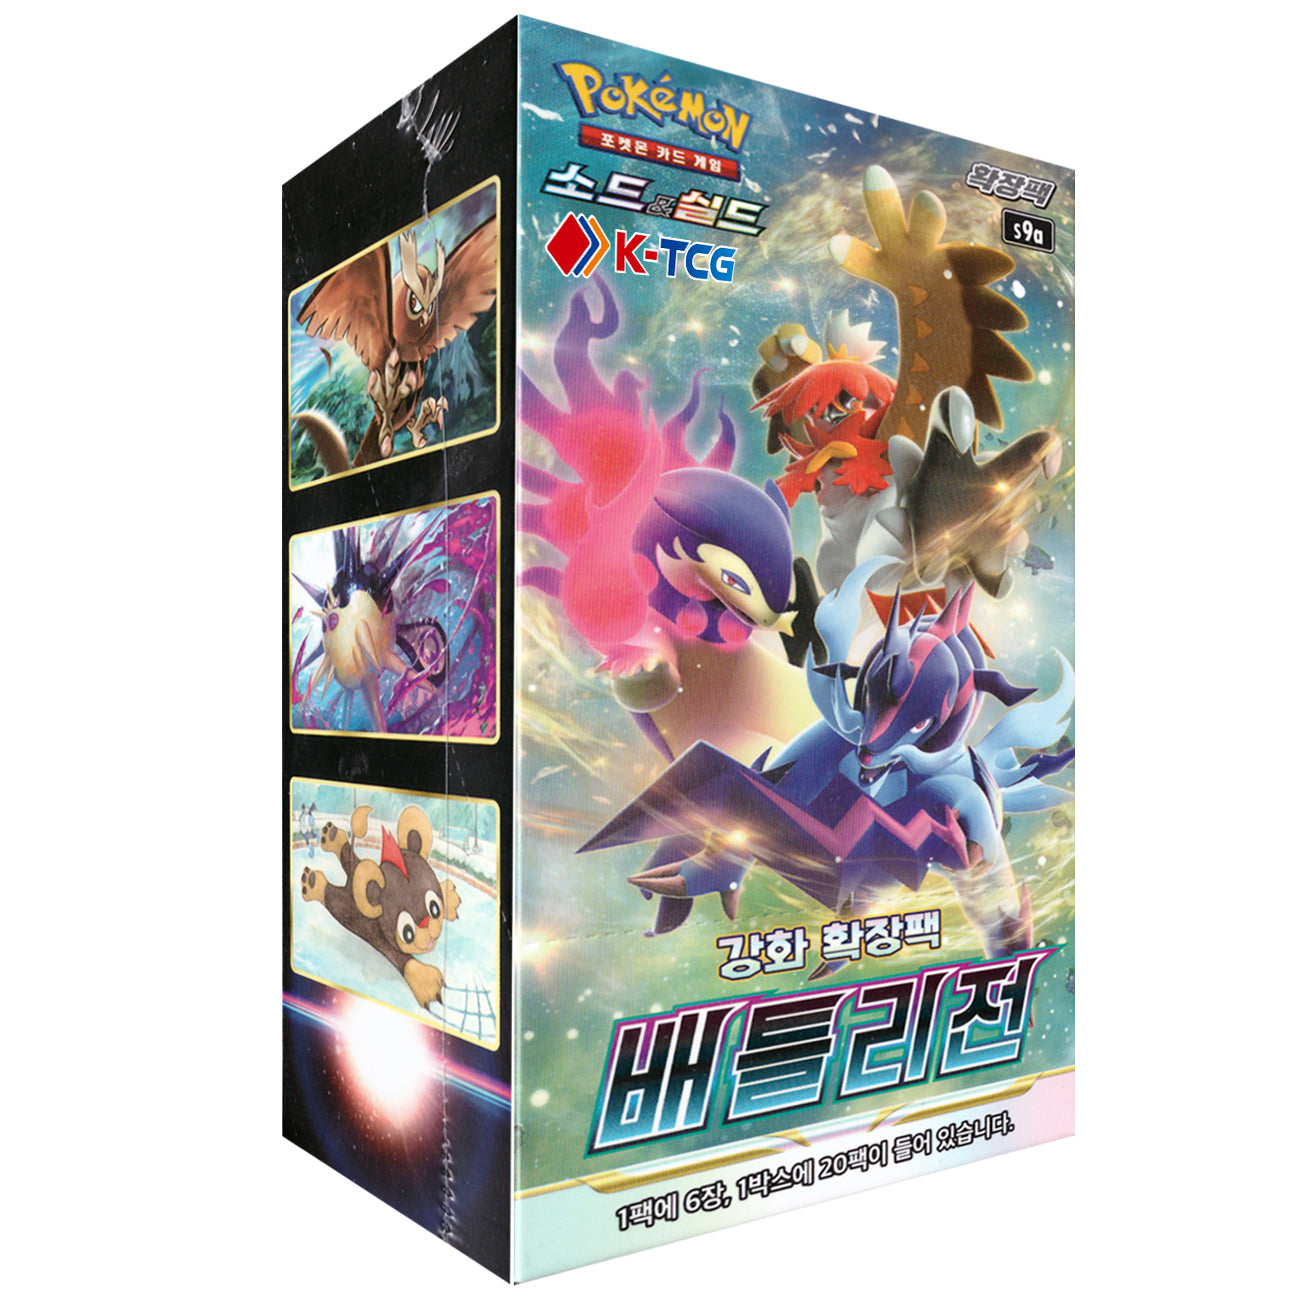 Pokemon Cards Pokemon 151 sv2a Booster Box Korean Ver